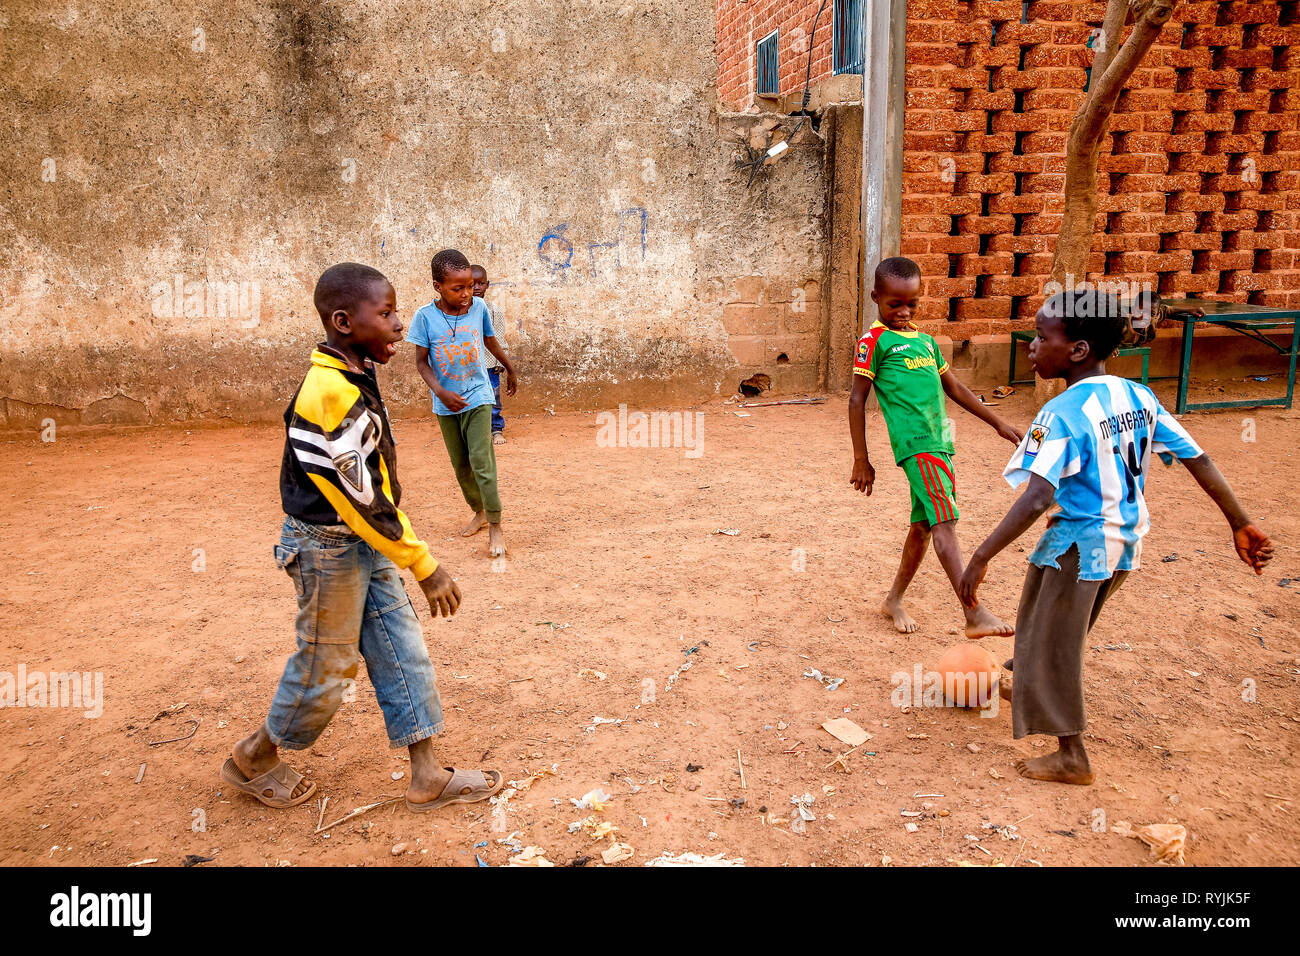 ICCV Nazemse ONG à Ouagadougou, Burkina Faso. Les garçons jouent au football. Banque D'Images